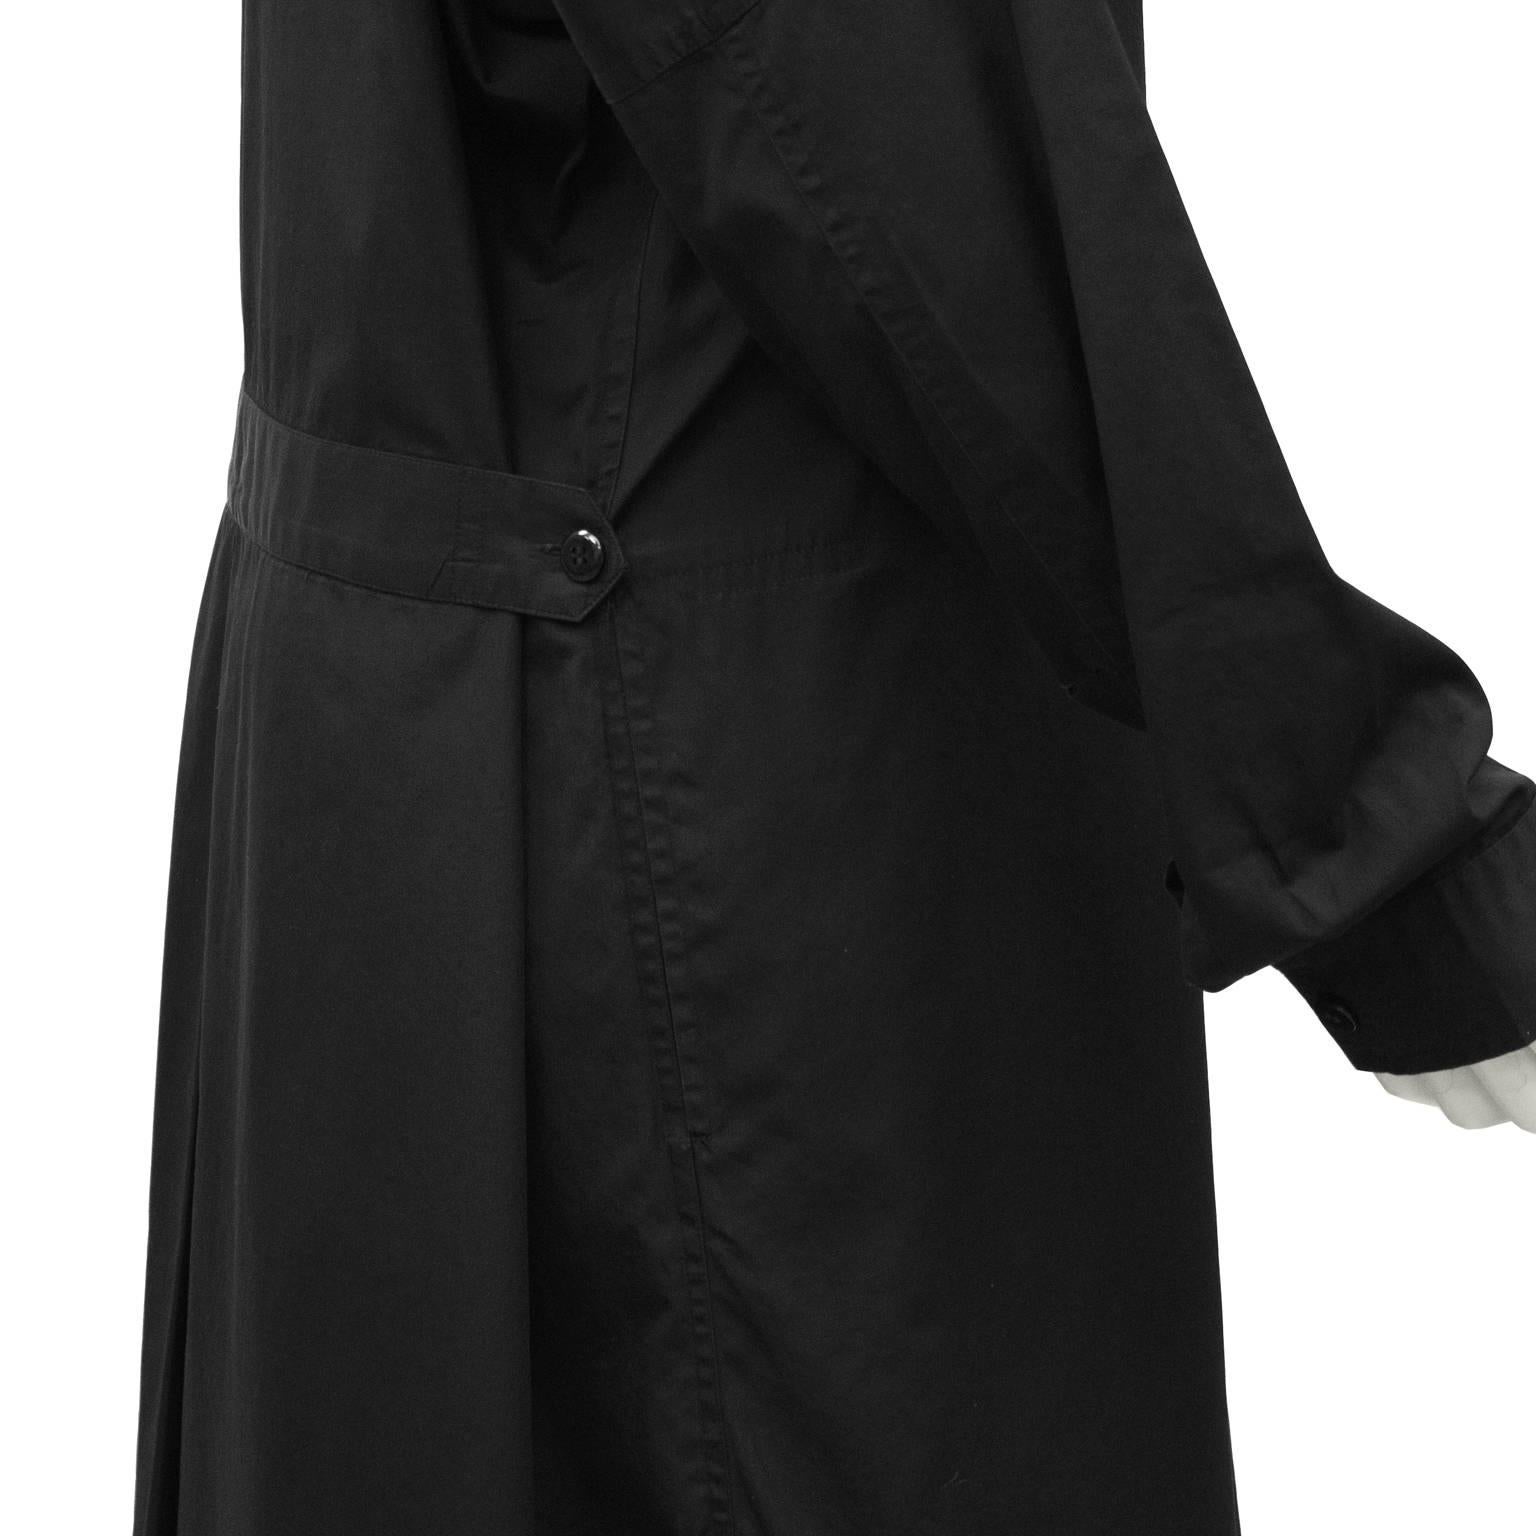 Women's 1980's Plantation/Issey Miyake Black Tunic Dress